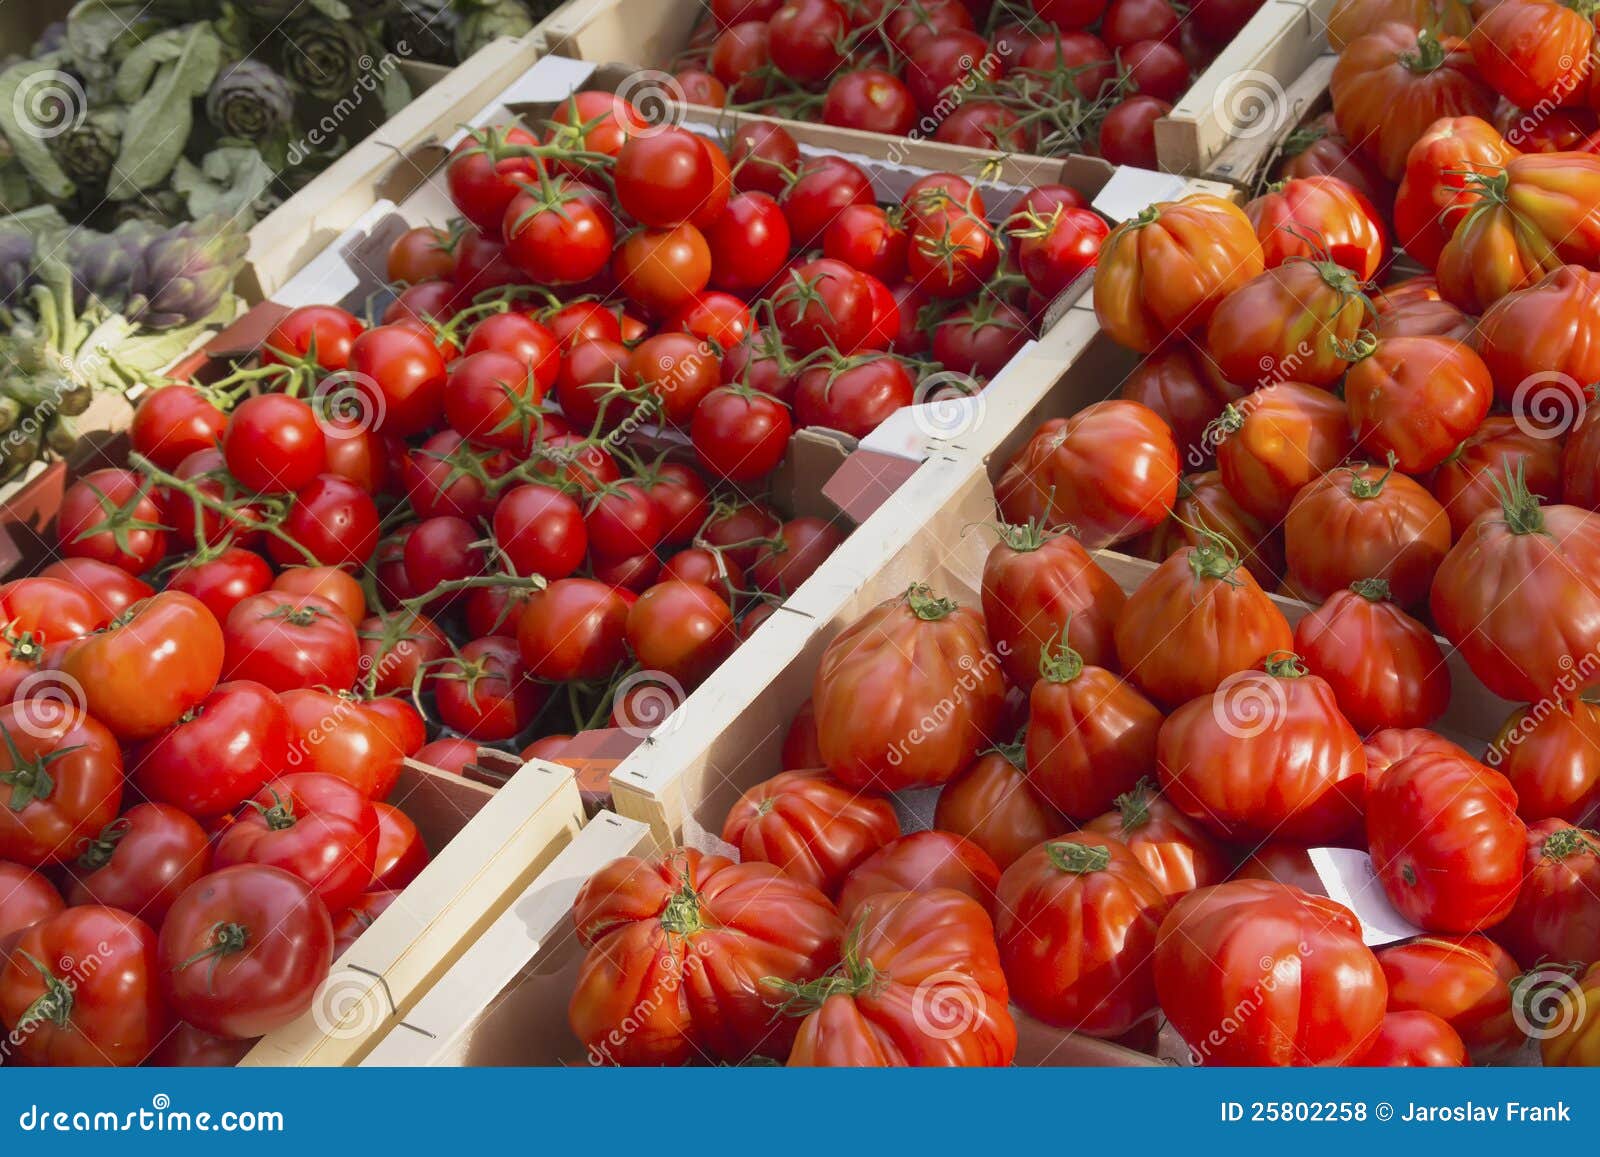 Tomatoes At The Market Royalty Free Stock Photos - Image: 25802258